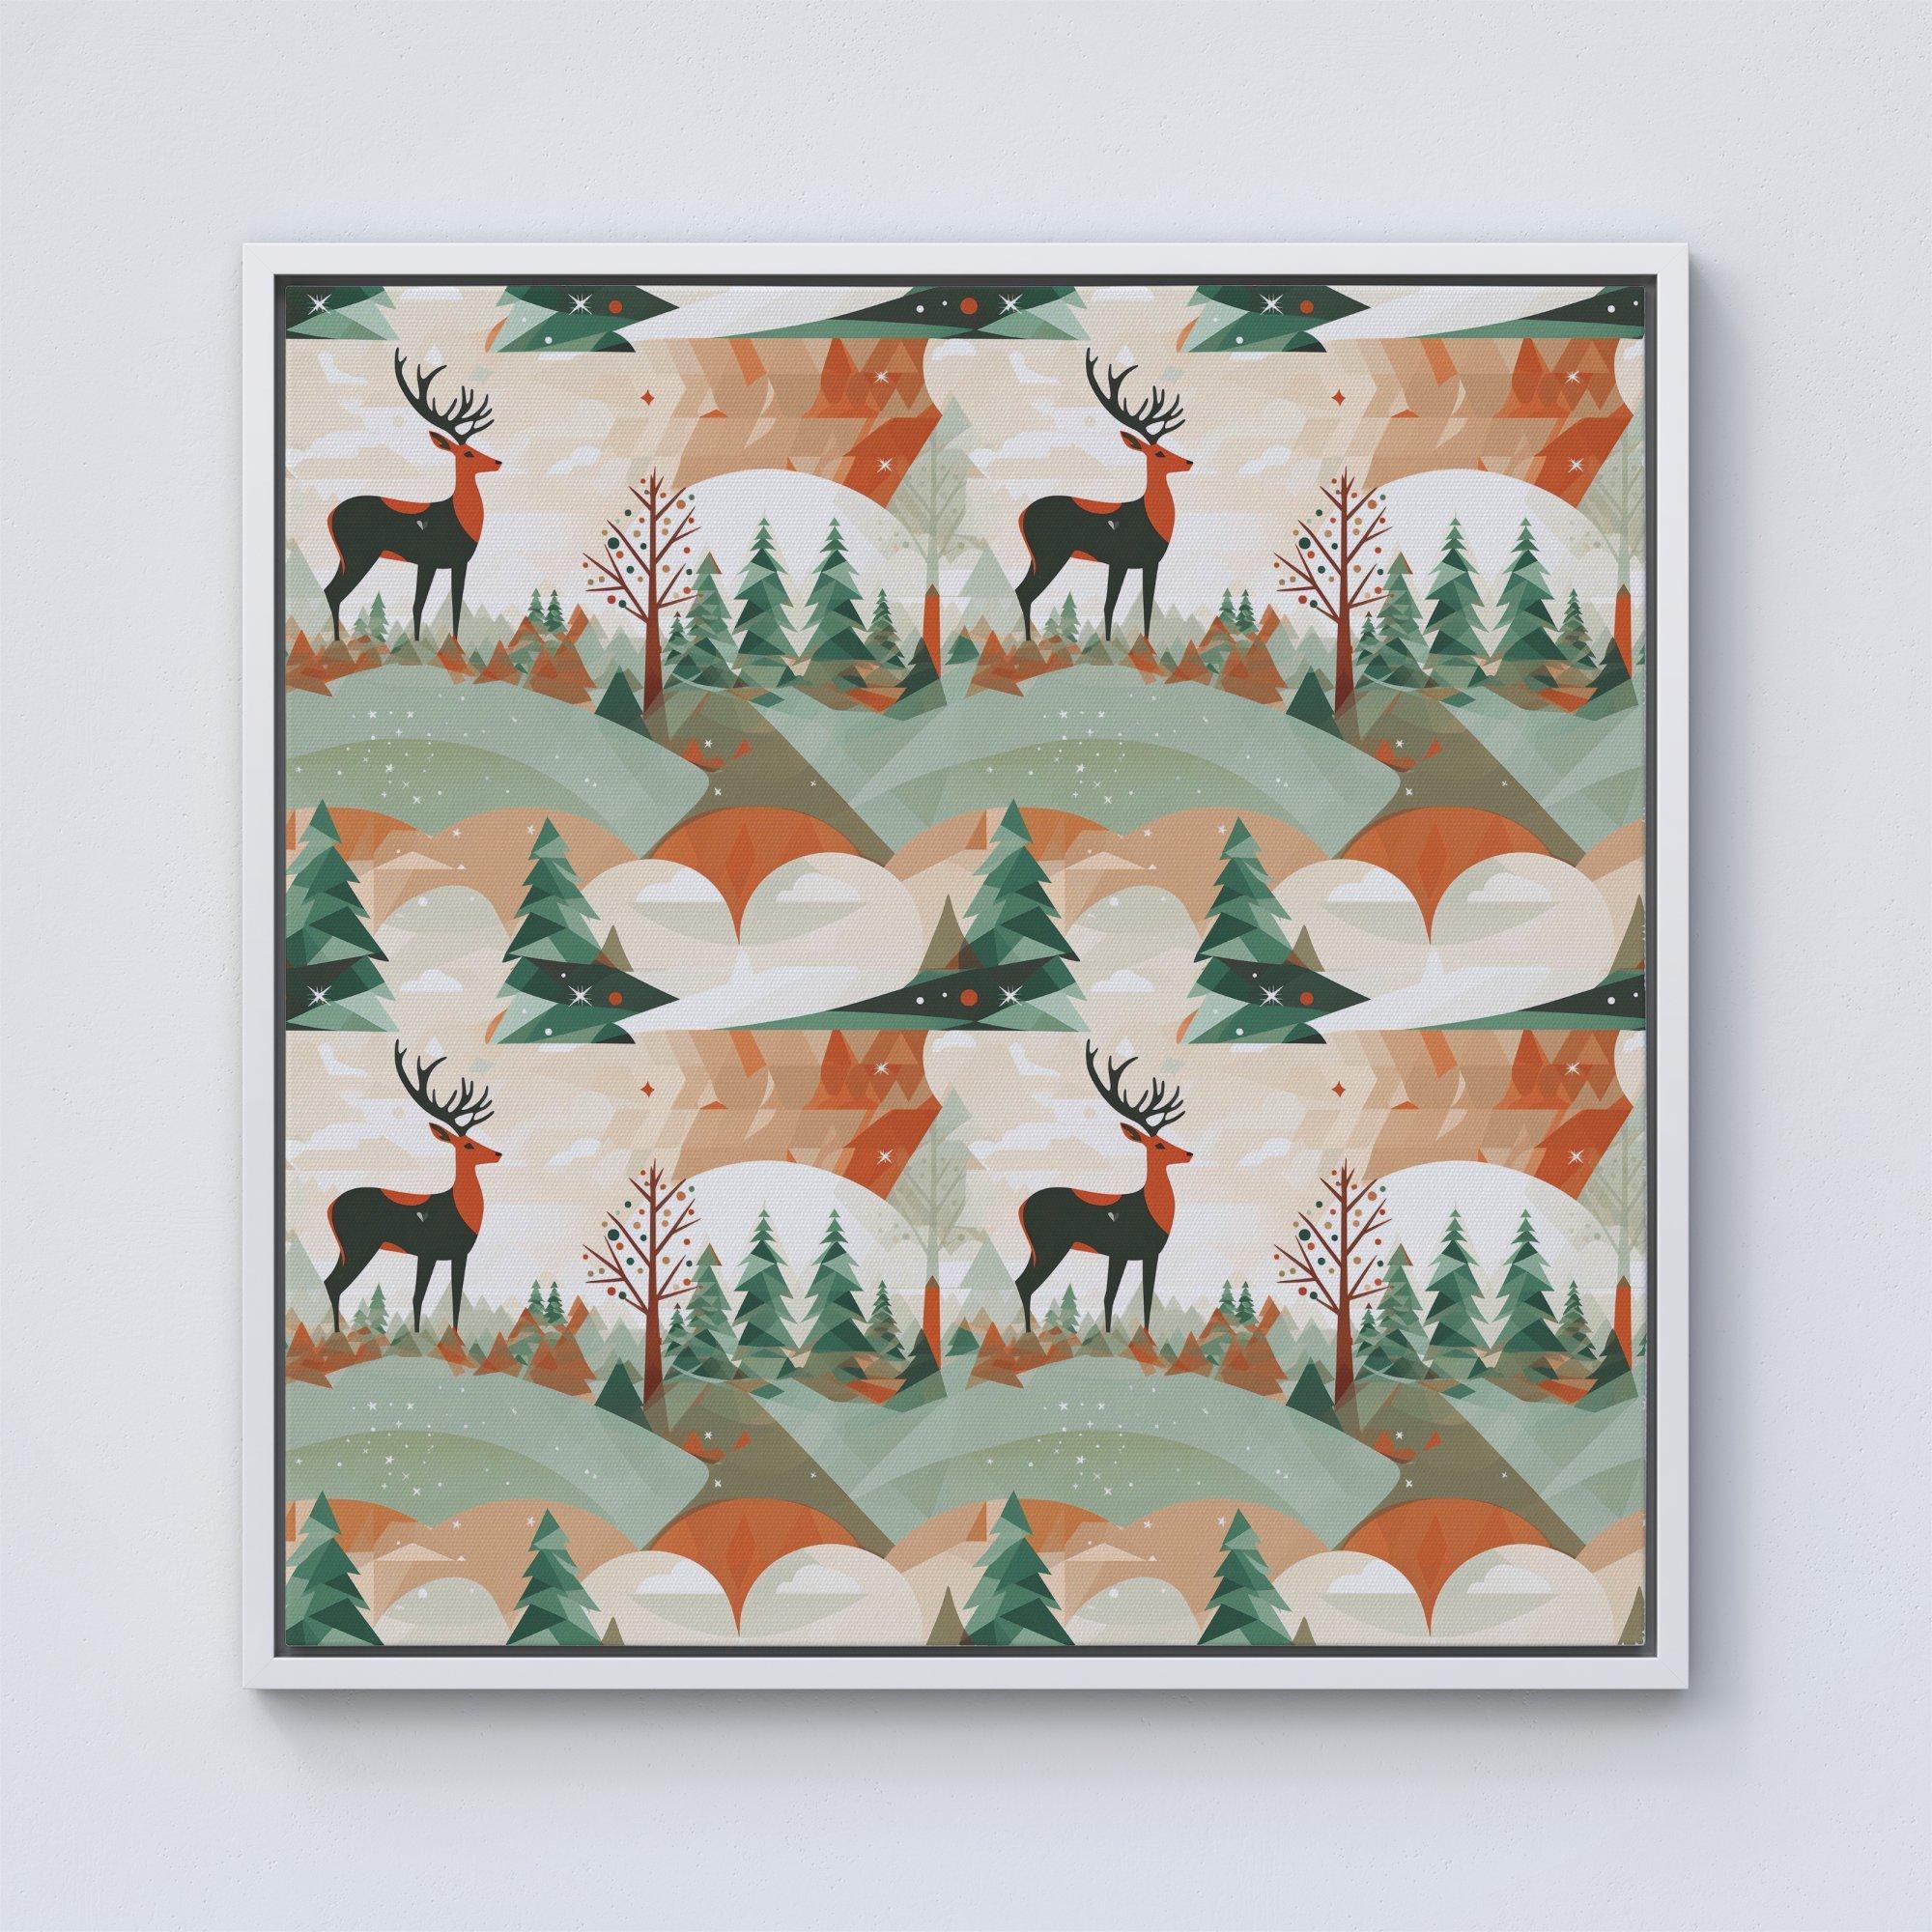 Reindeer On A Snowy Landscape Pattern Framed Canvas